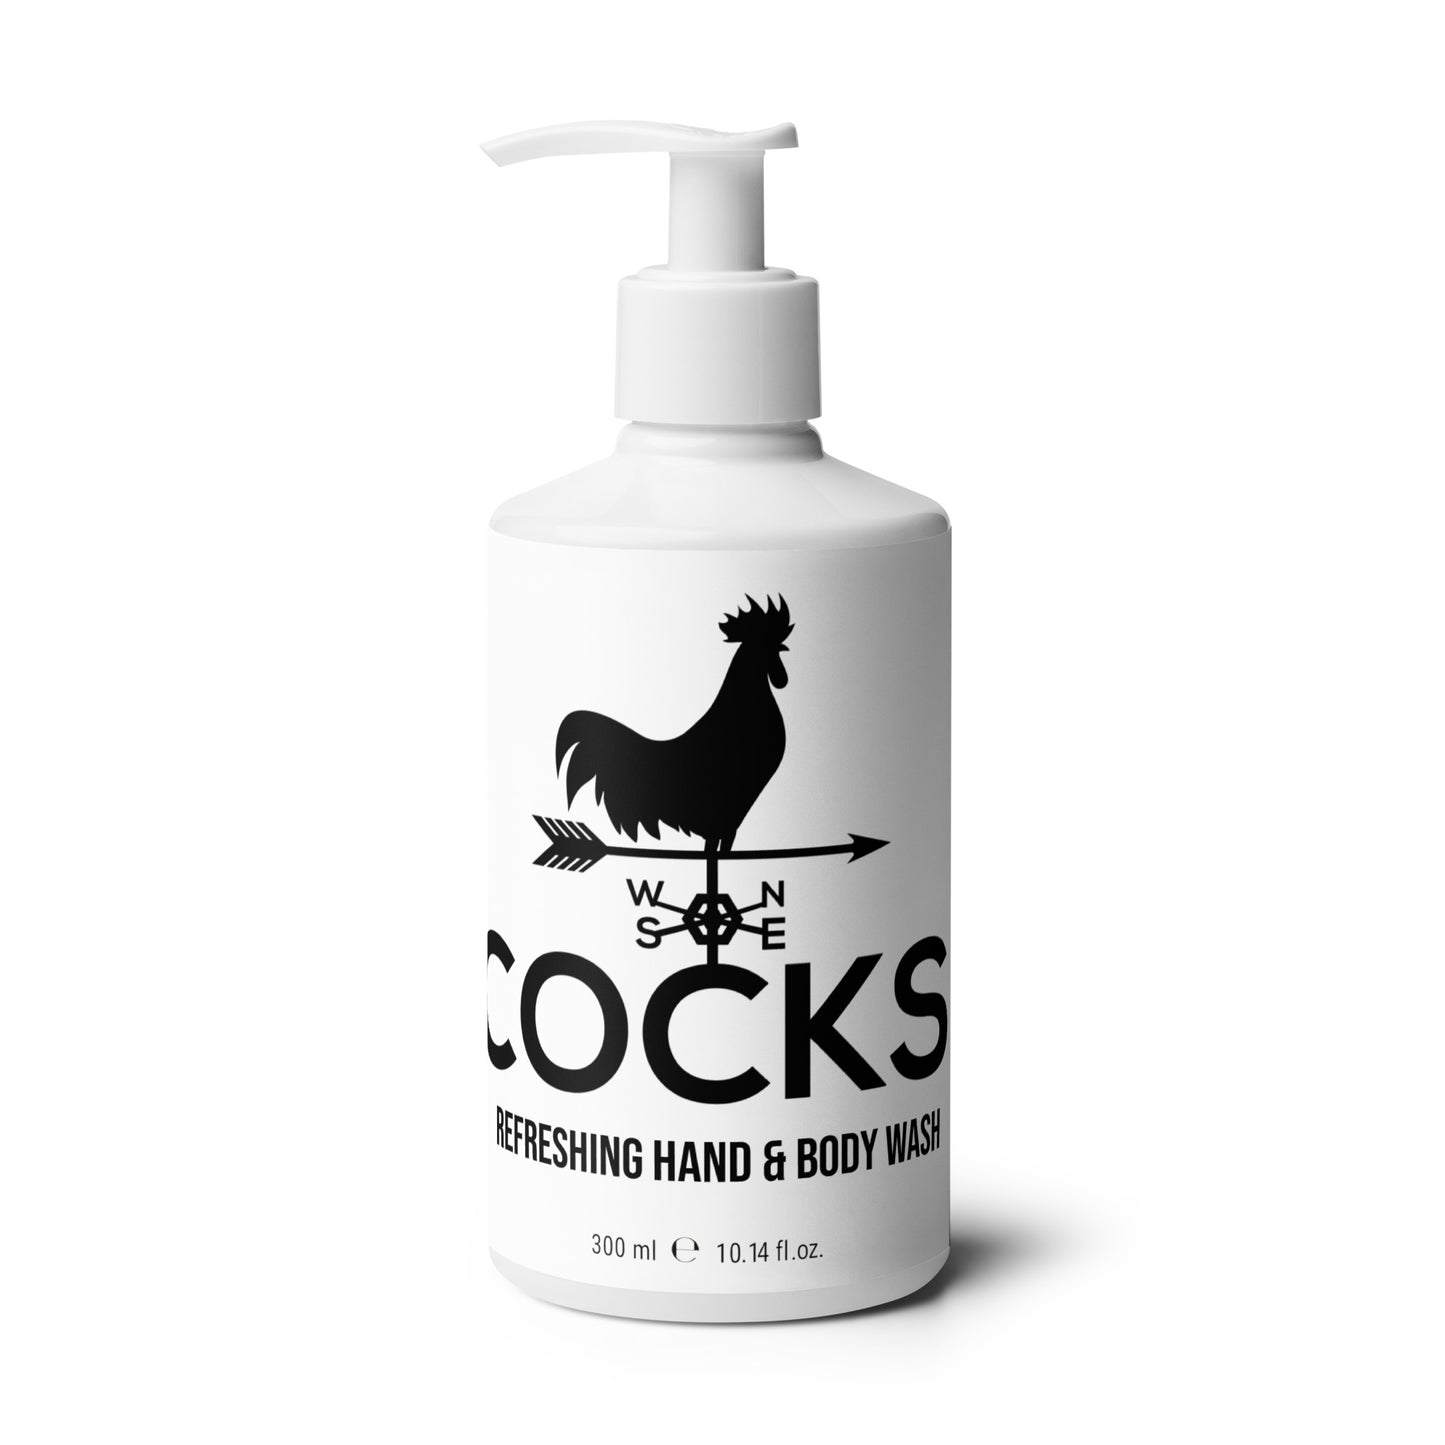 Cocks Refreshing Hand & Body Wash